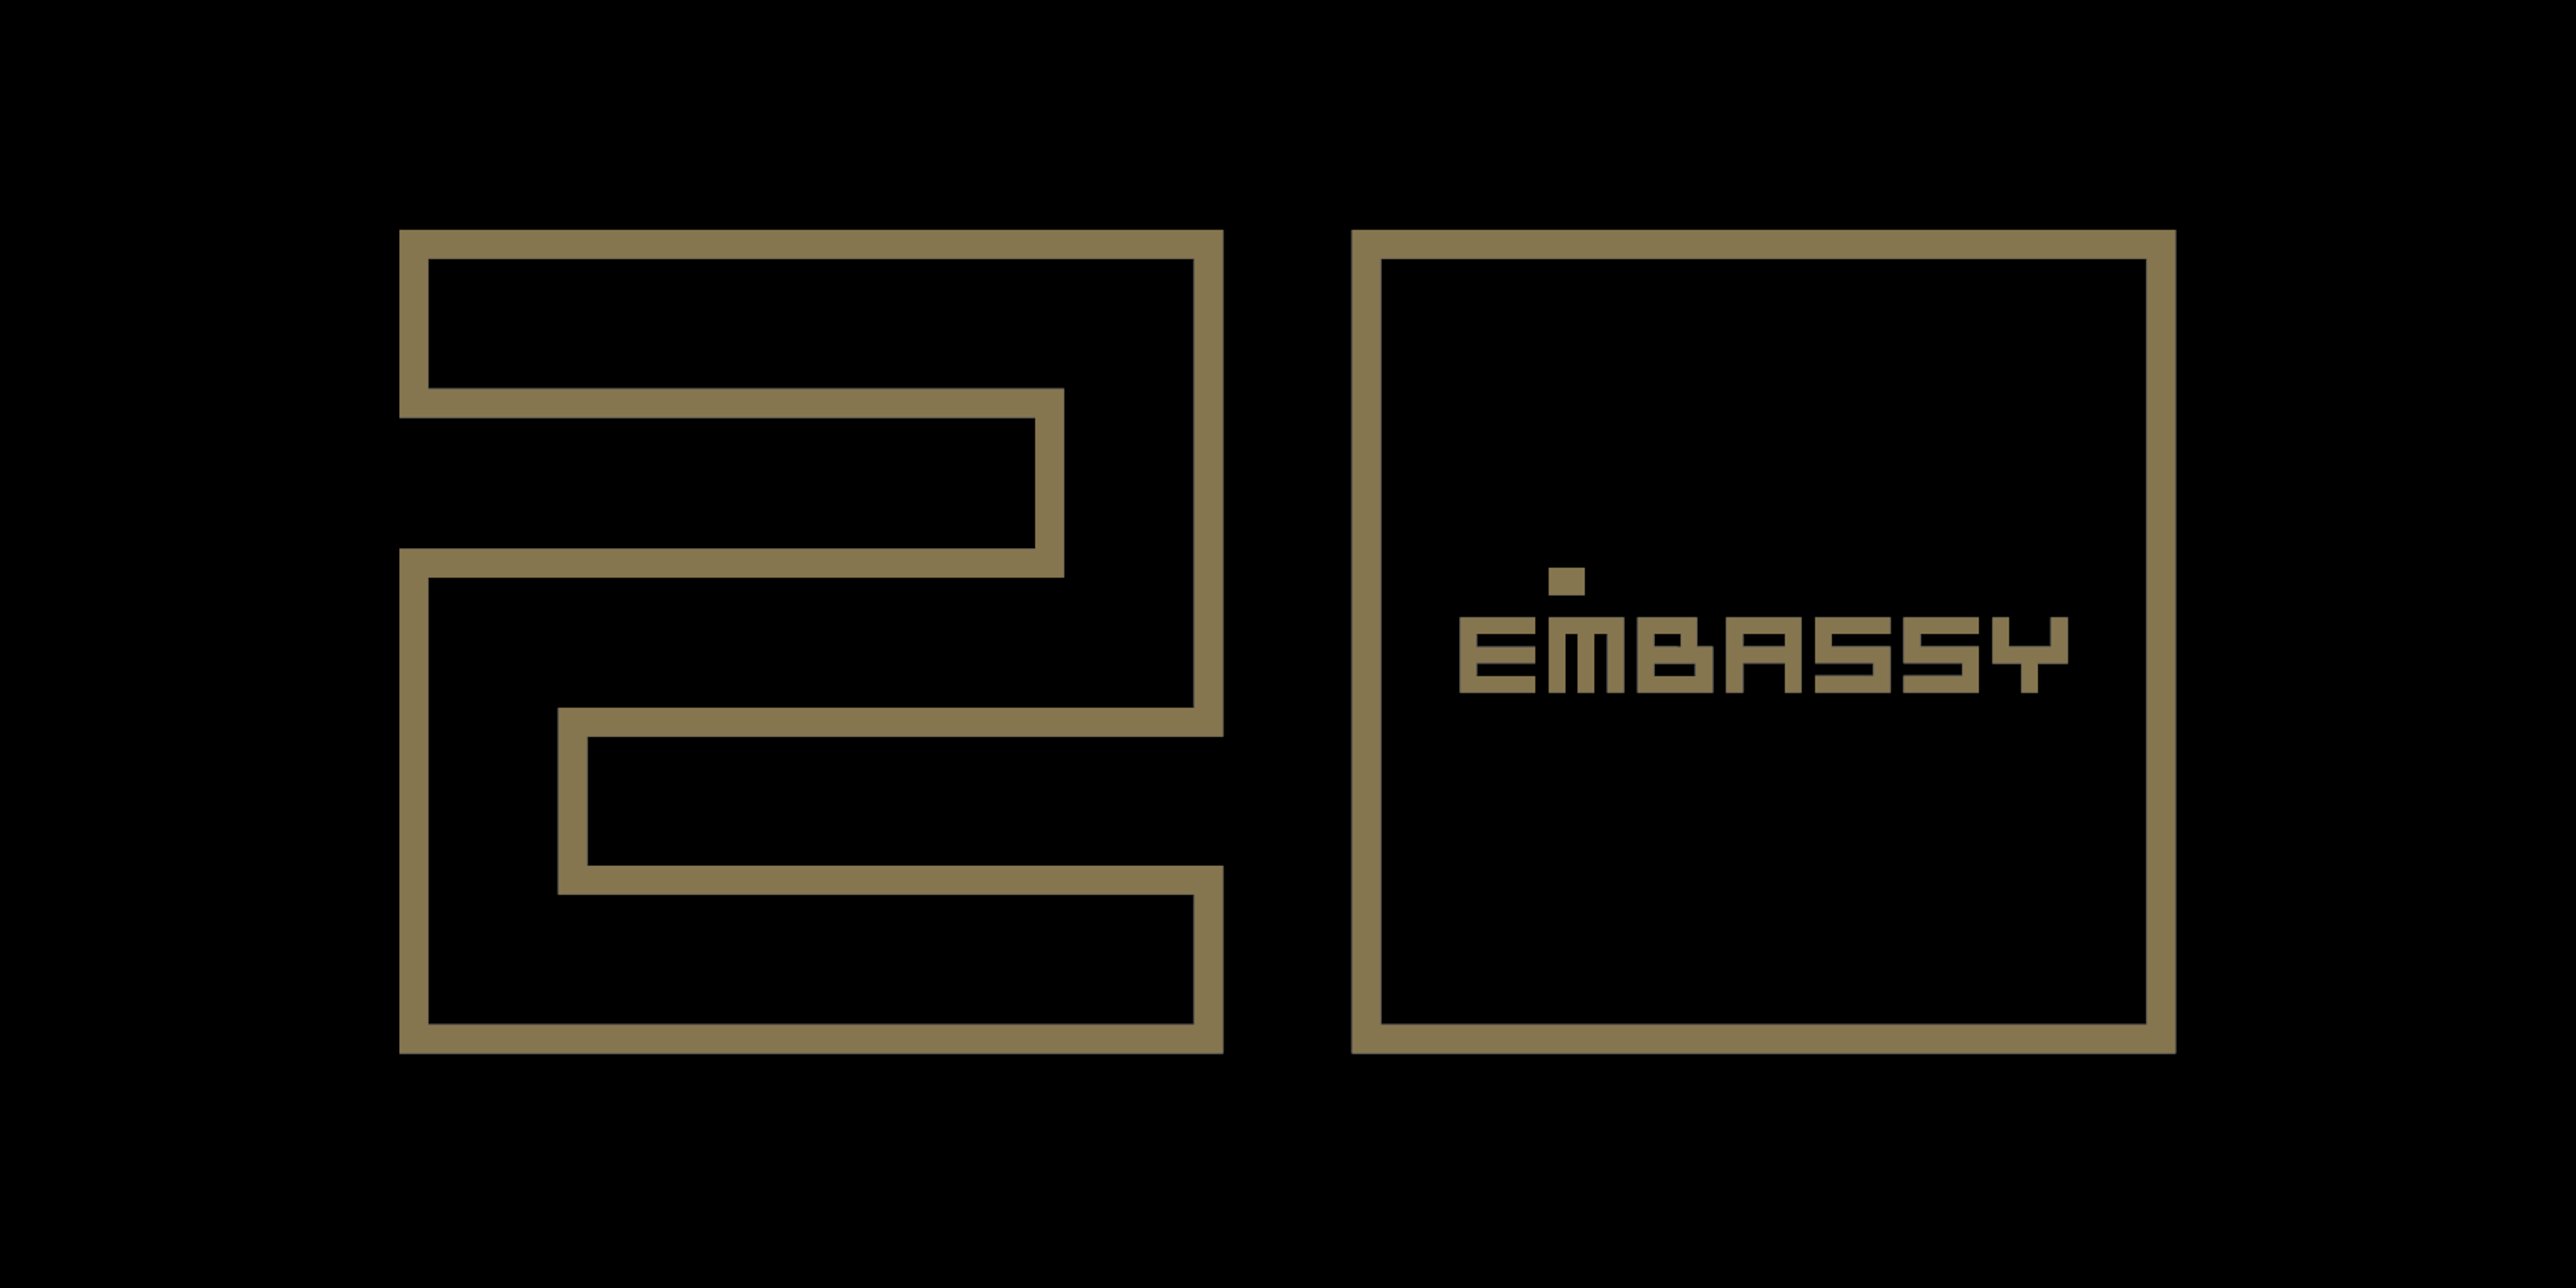 The Embassy Celebrates 20th Anniversary